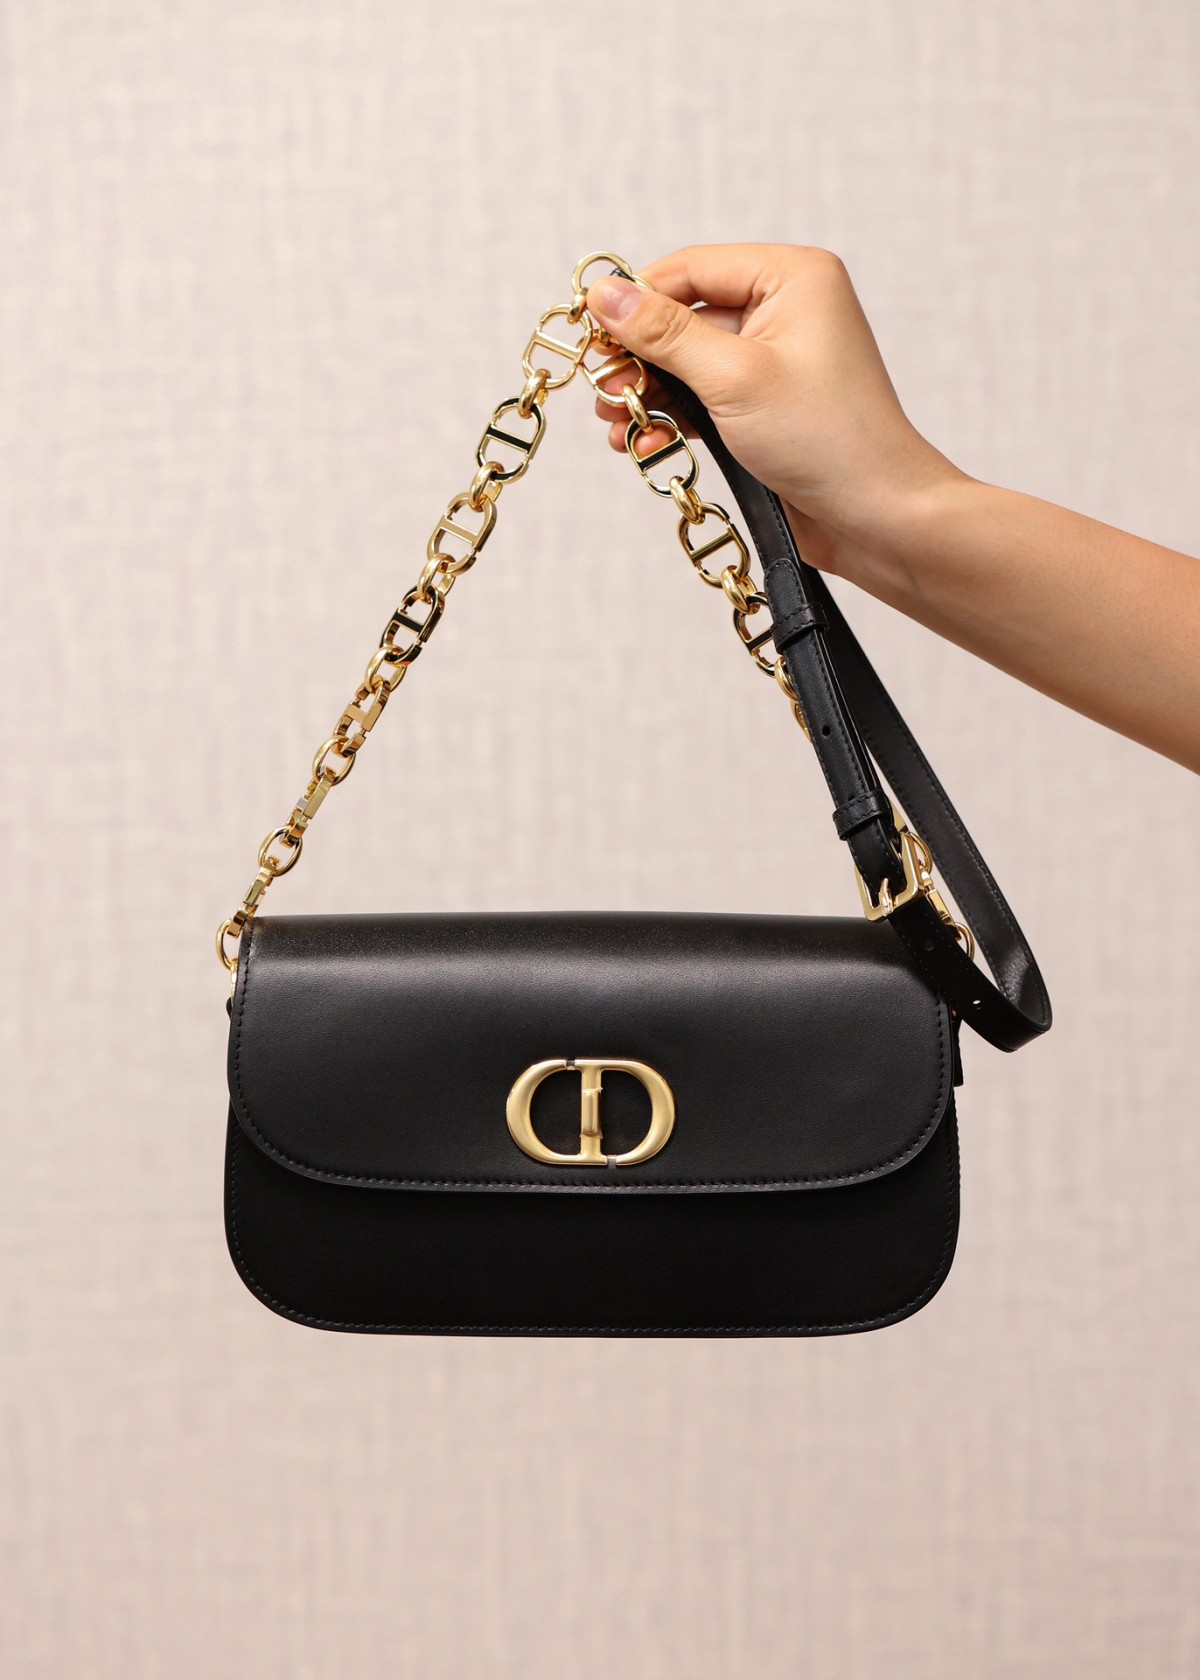 How good quality is a Shebag replica Dior 30 Montaigne Avenue bag? (2023 updated)-အရည်အသွေးအကောင်းဆုံးအတု Louis Vuitton Bag အွန်လိုင်းစတိုး၊ ပုံစံတူဒီဇိုင်နာအိတ် ru